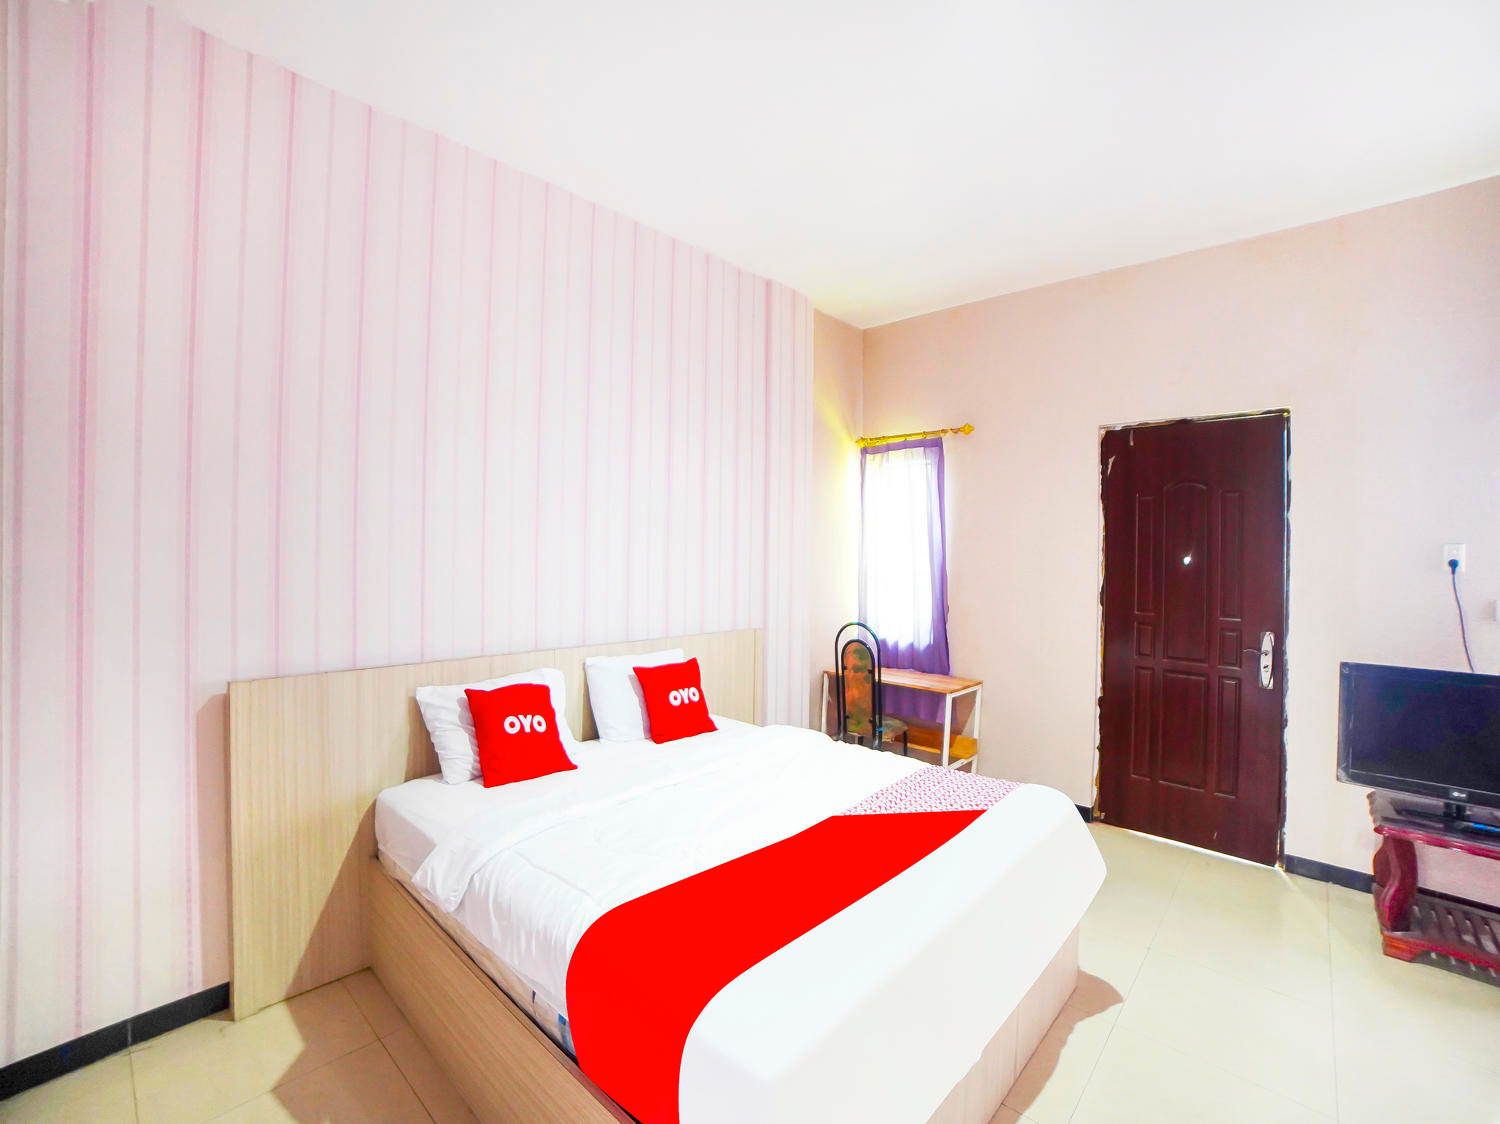 Bedroom 3, OYO 91283 Sg Premium Guest House, Medan